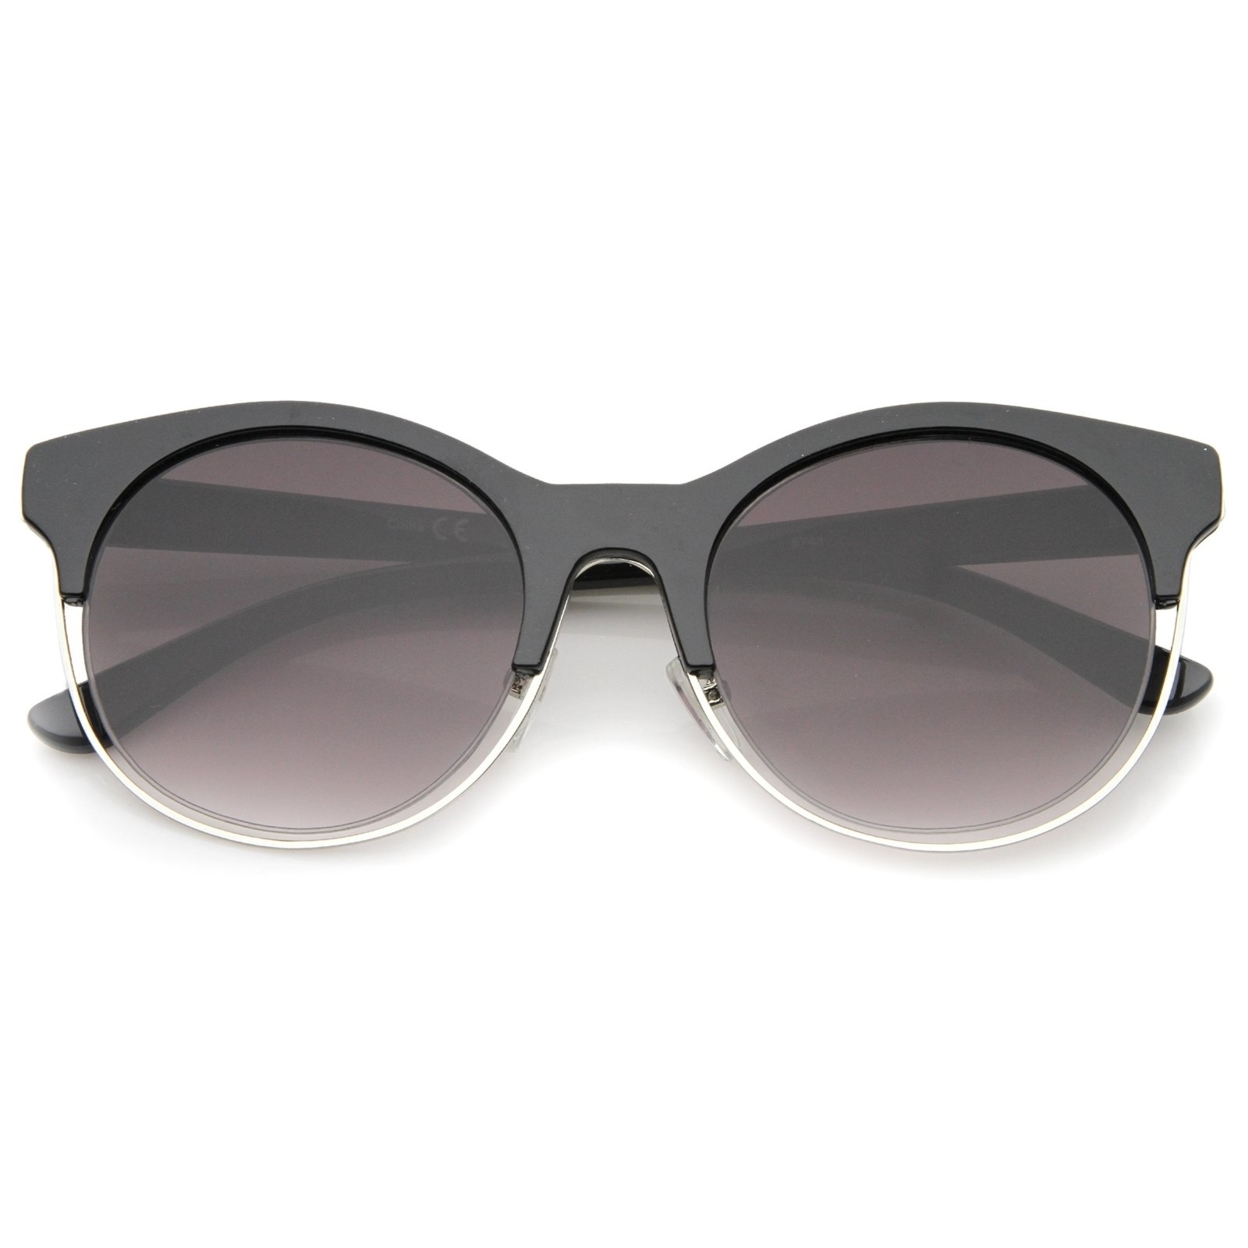 Modern Half Frame Metal Trim Round Cat Eye Sunglasses 53mm - Shiny Black-Silver / Lavender